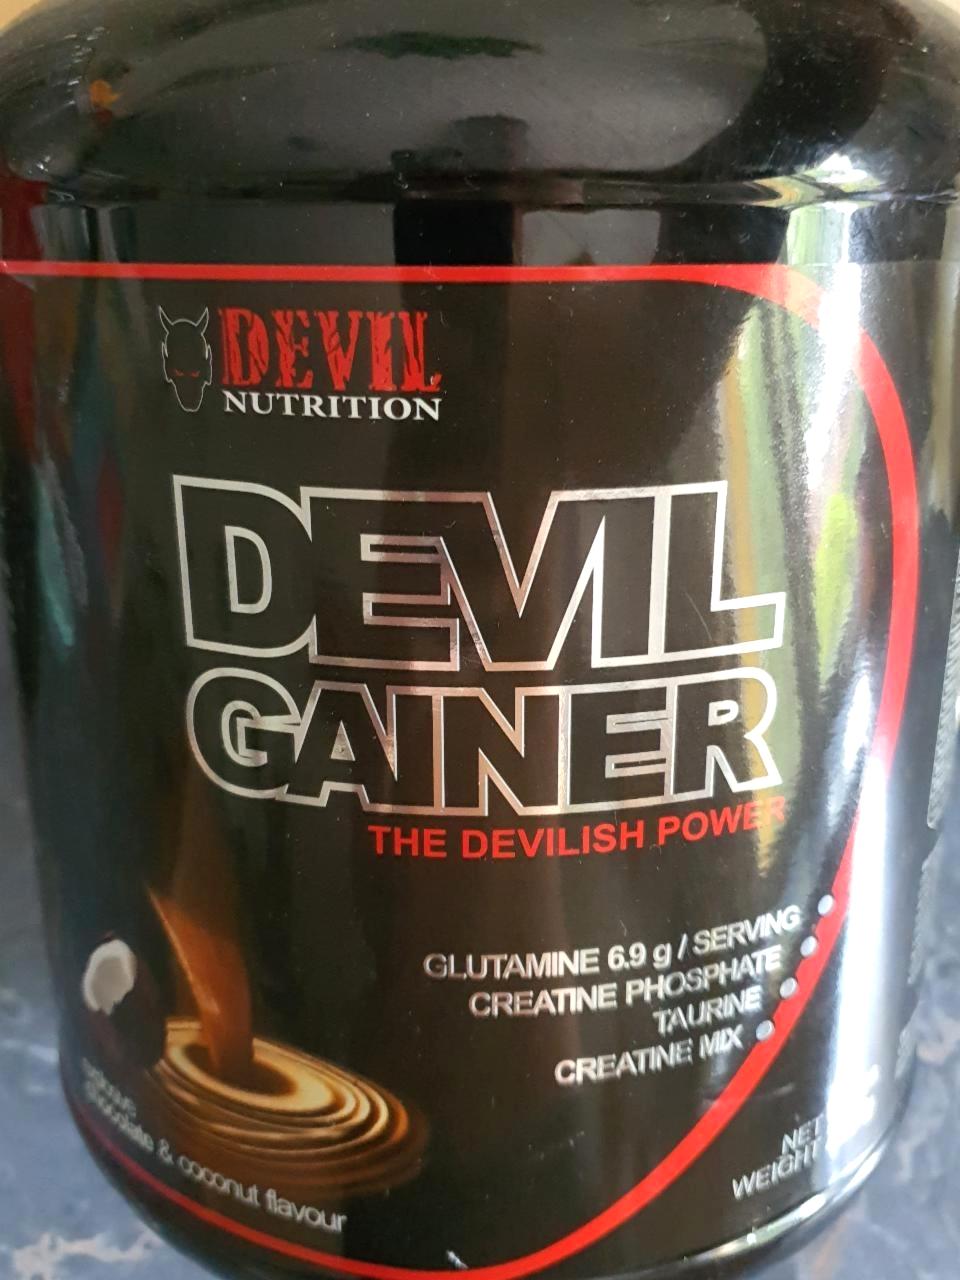 Képek - Devil Gainer tömegnövelő fehérjepor Devil Nutrition